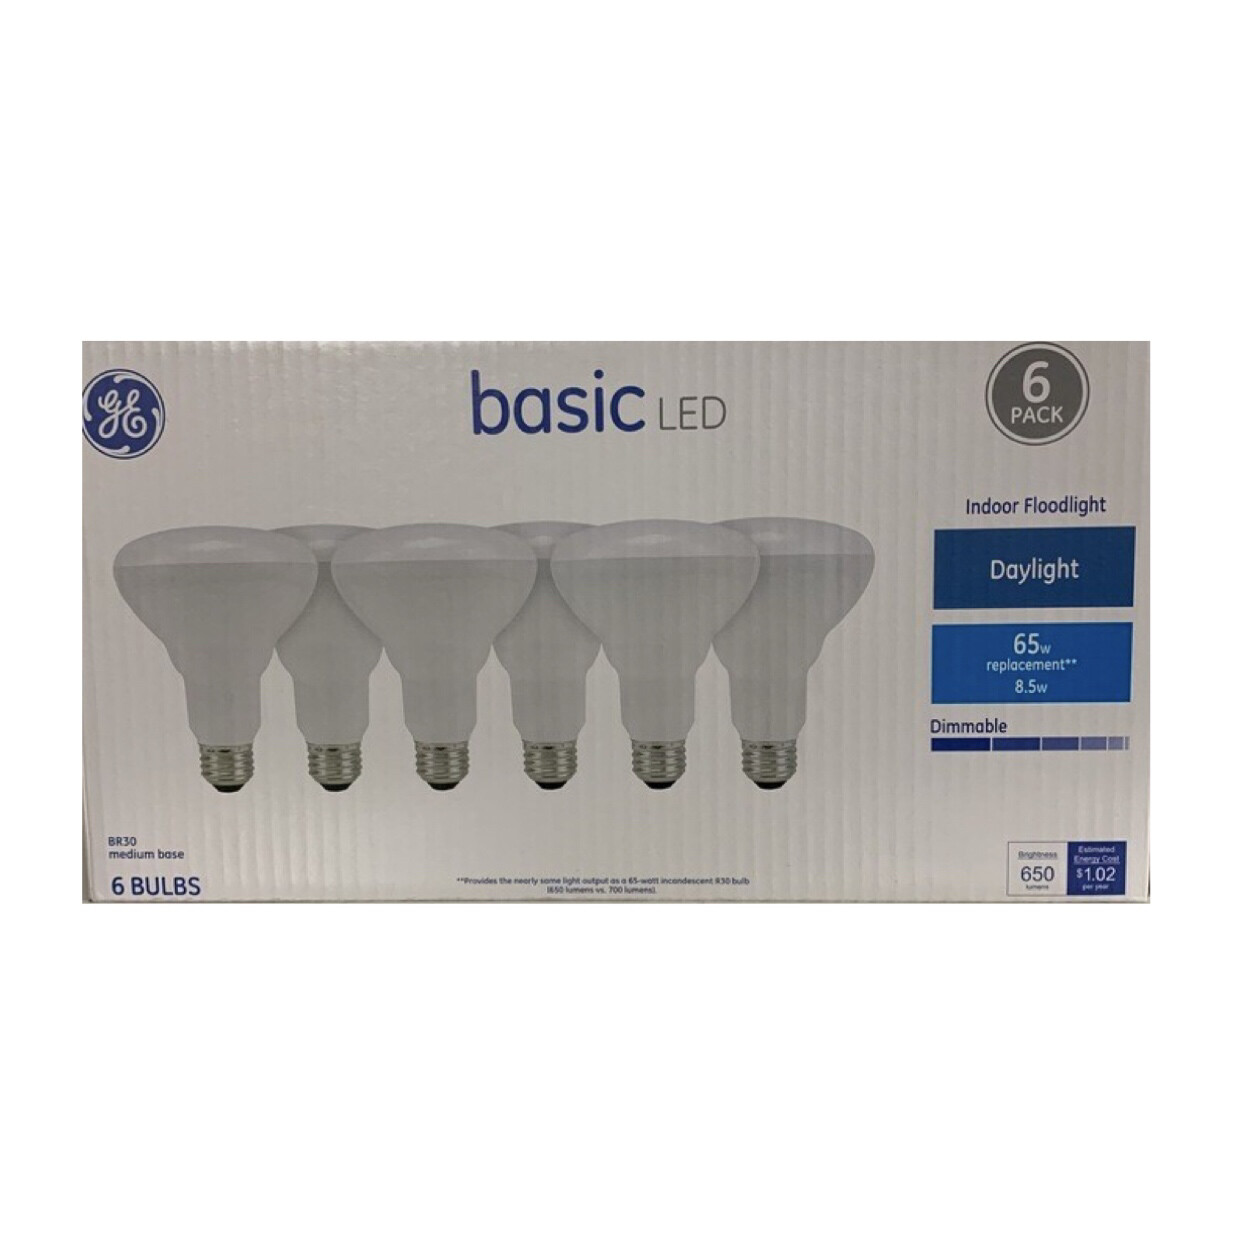 GE Basic LED Daylight Indoor Floodlights 6 Pack